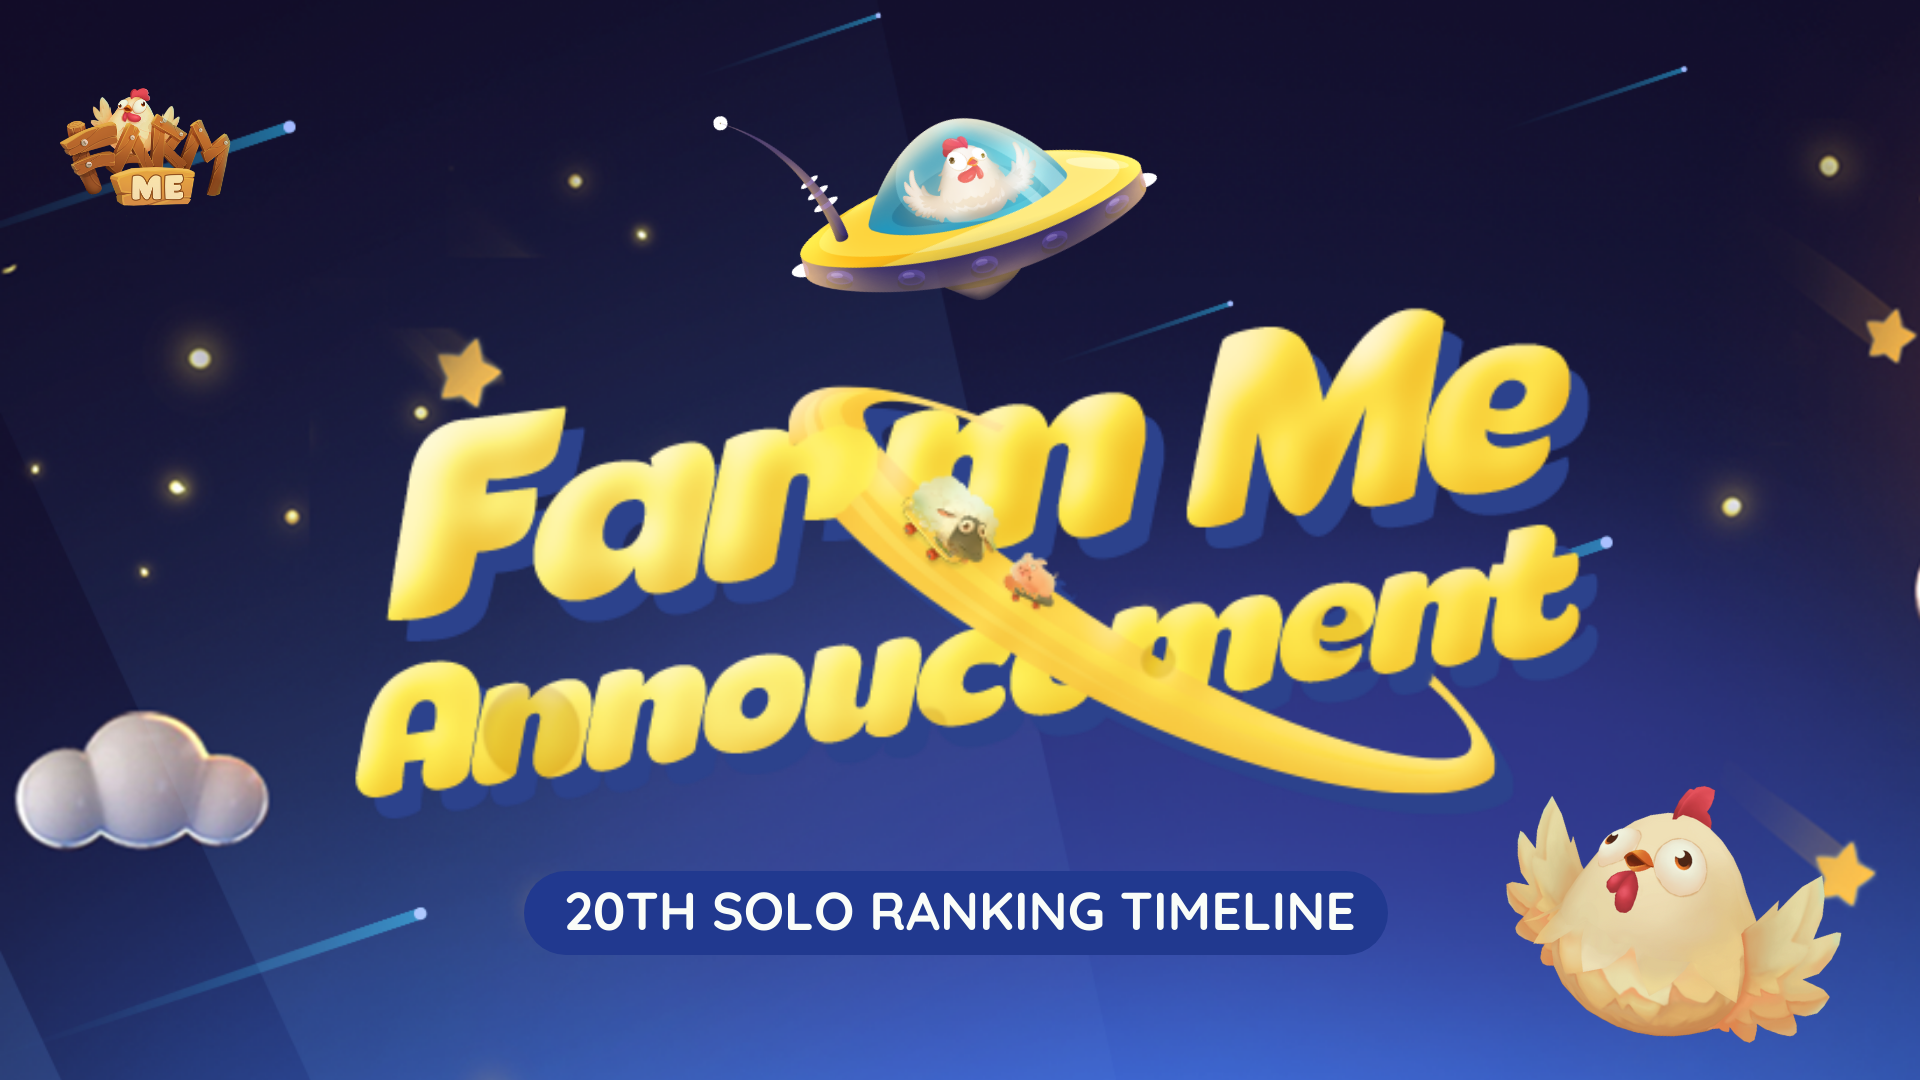 New Update - Solo Ranking week 20 update maintenance announcement